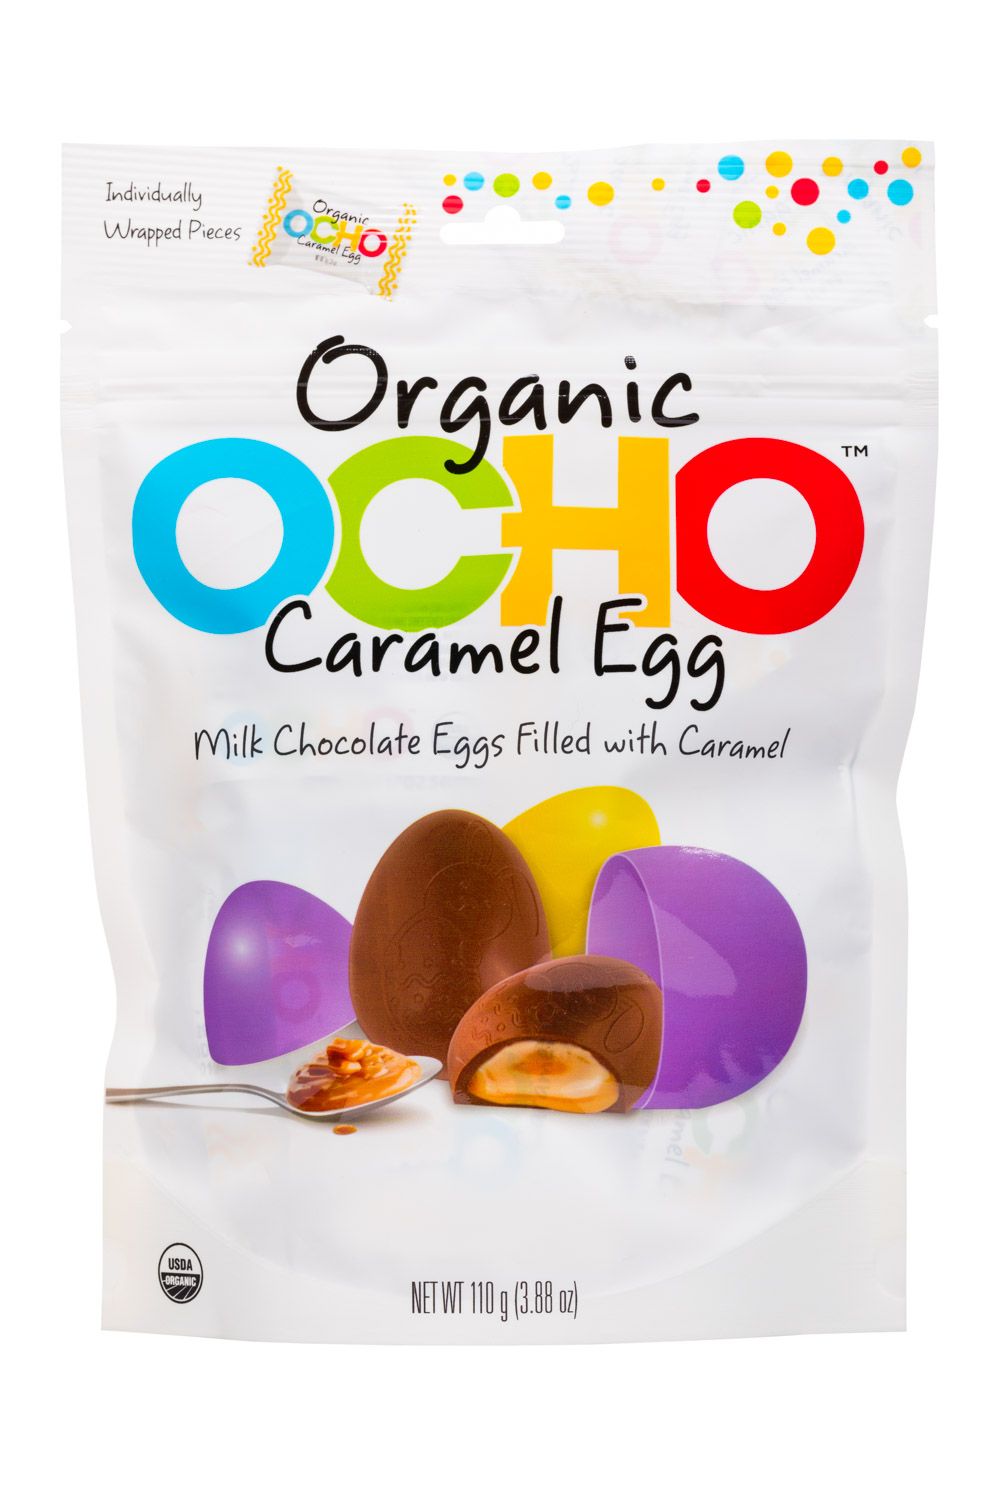 Organic Caramel Egg (2019)